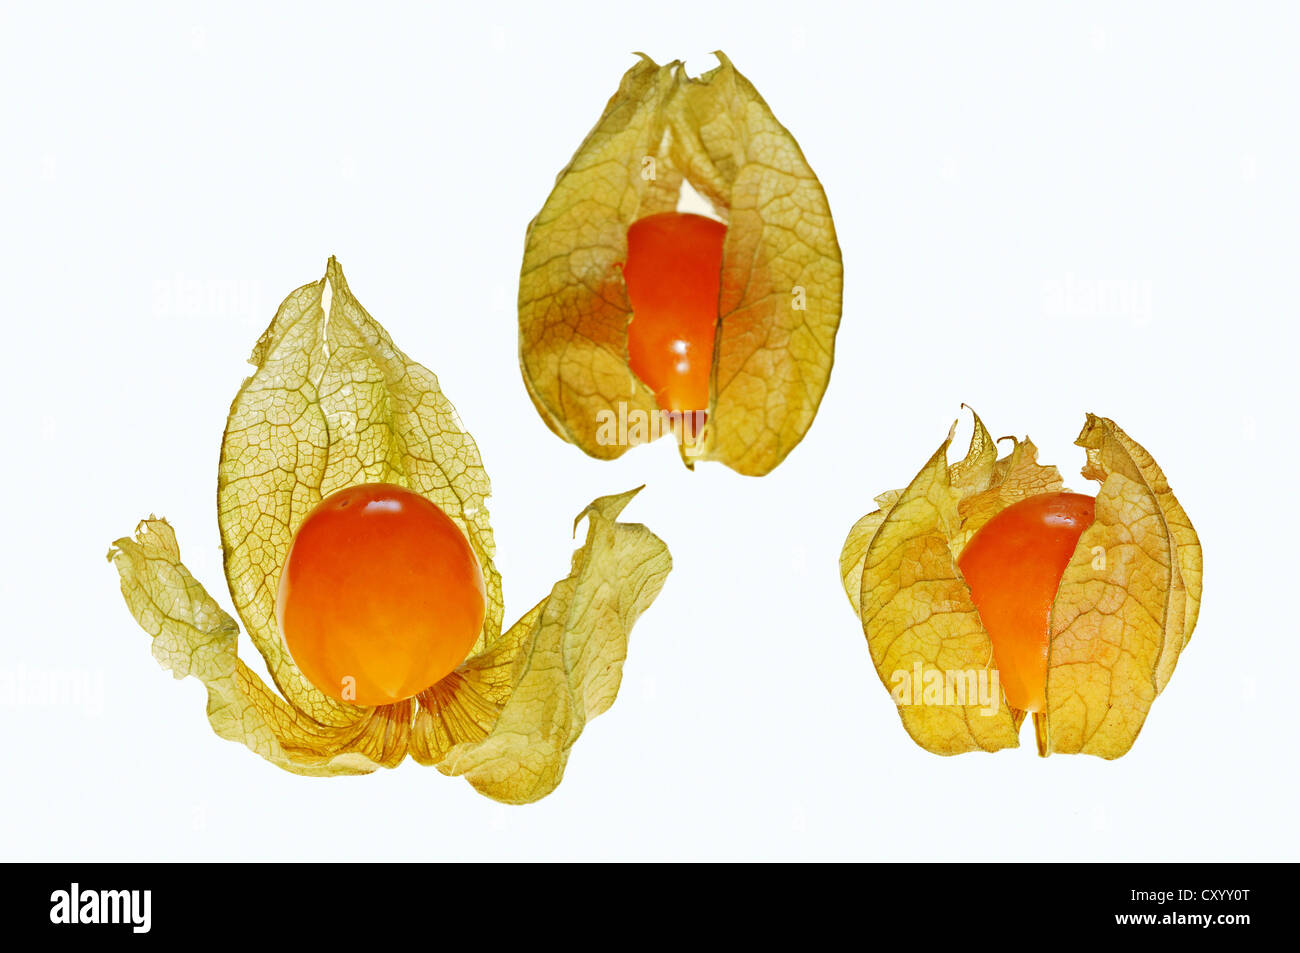 Cape Gooseberry, Goldenberry, Husk Cherry or Peruvian Ground Cherry (Physalis peruviana), fruits Stock Photo